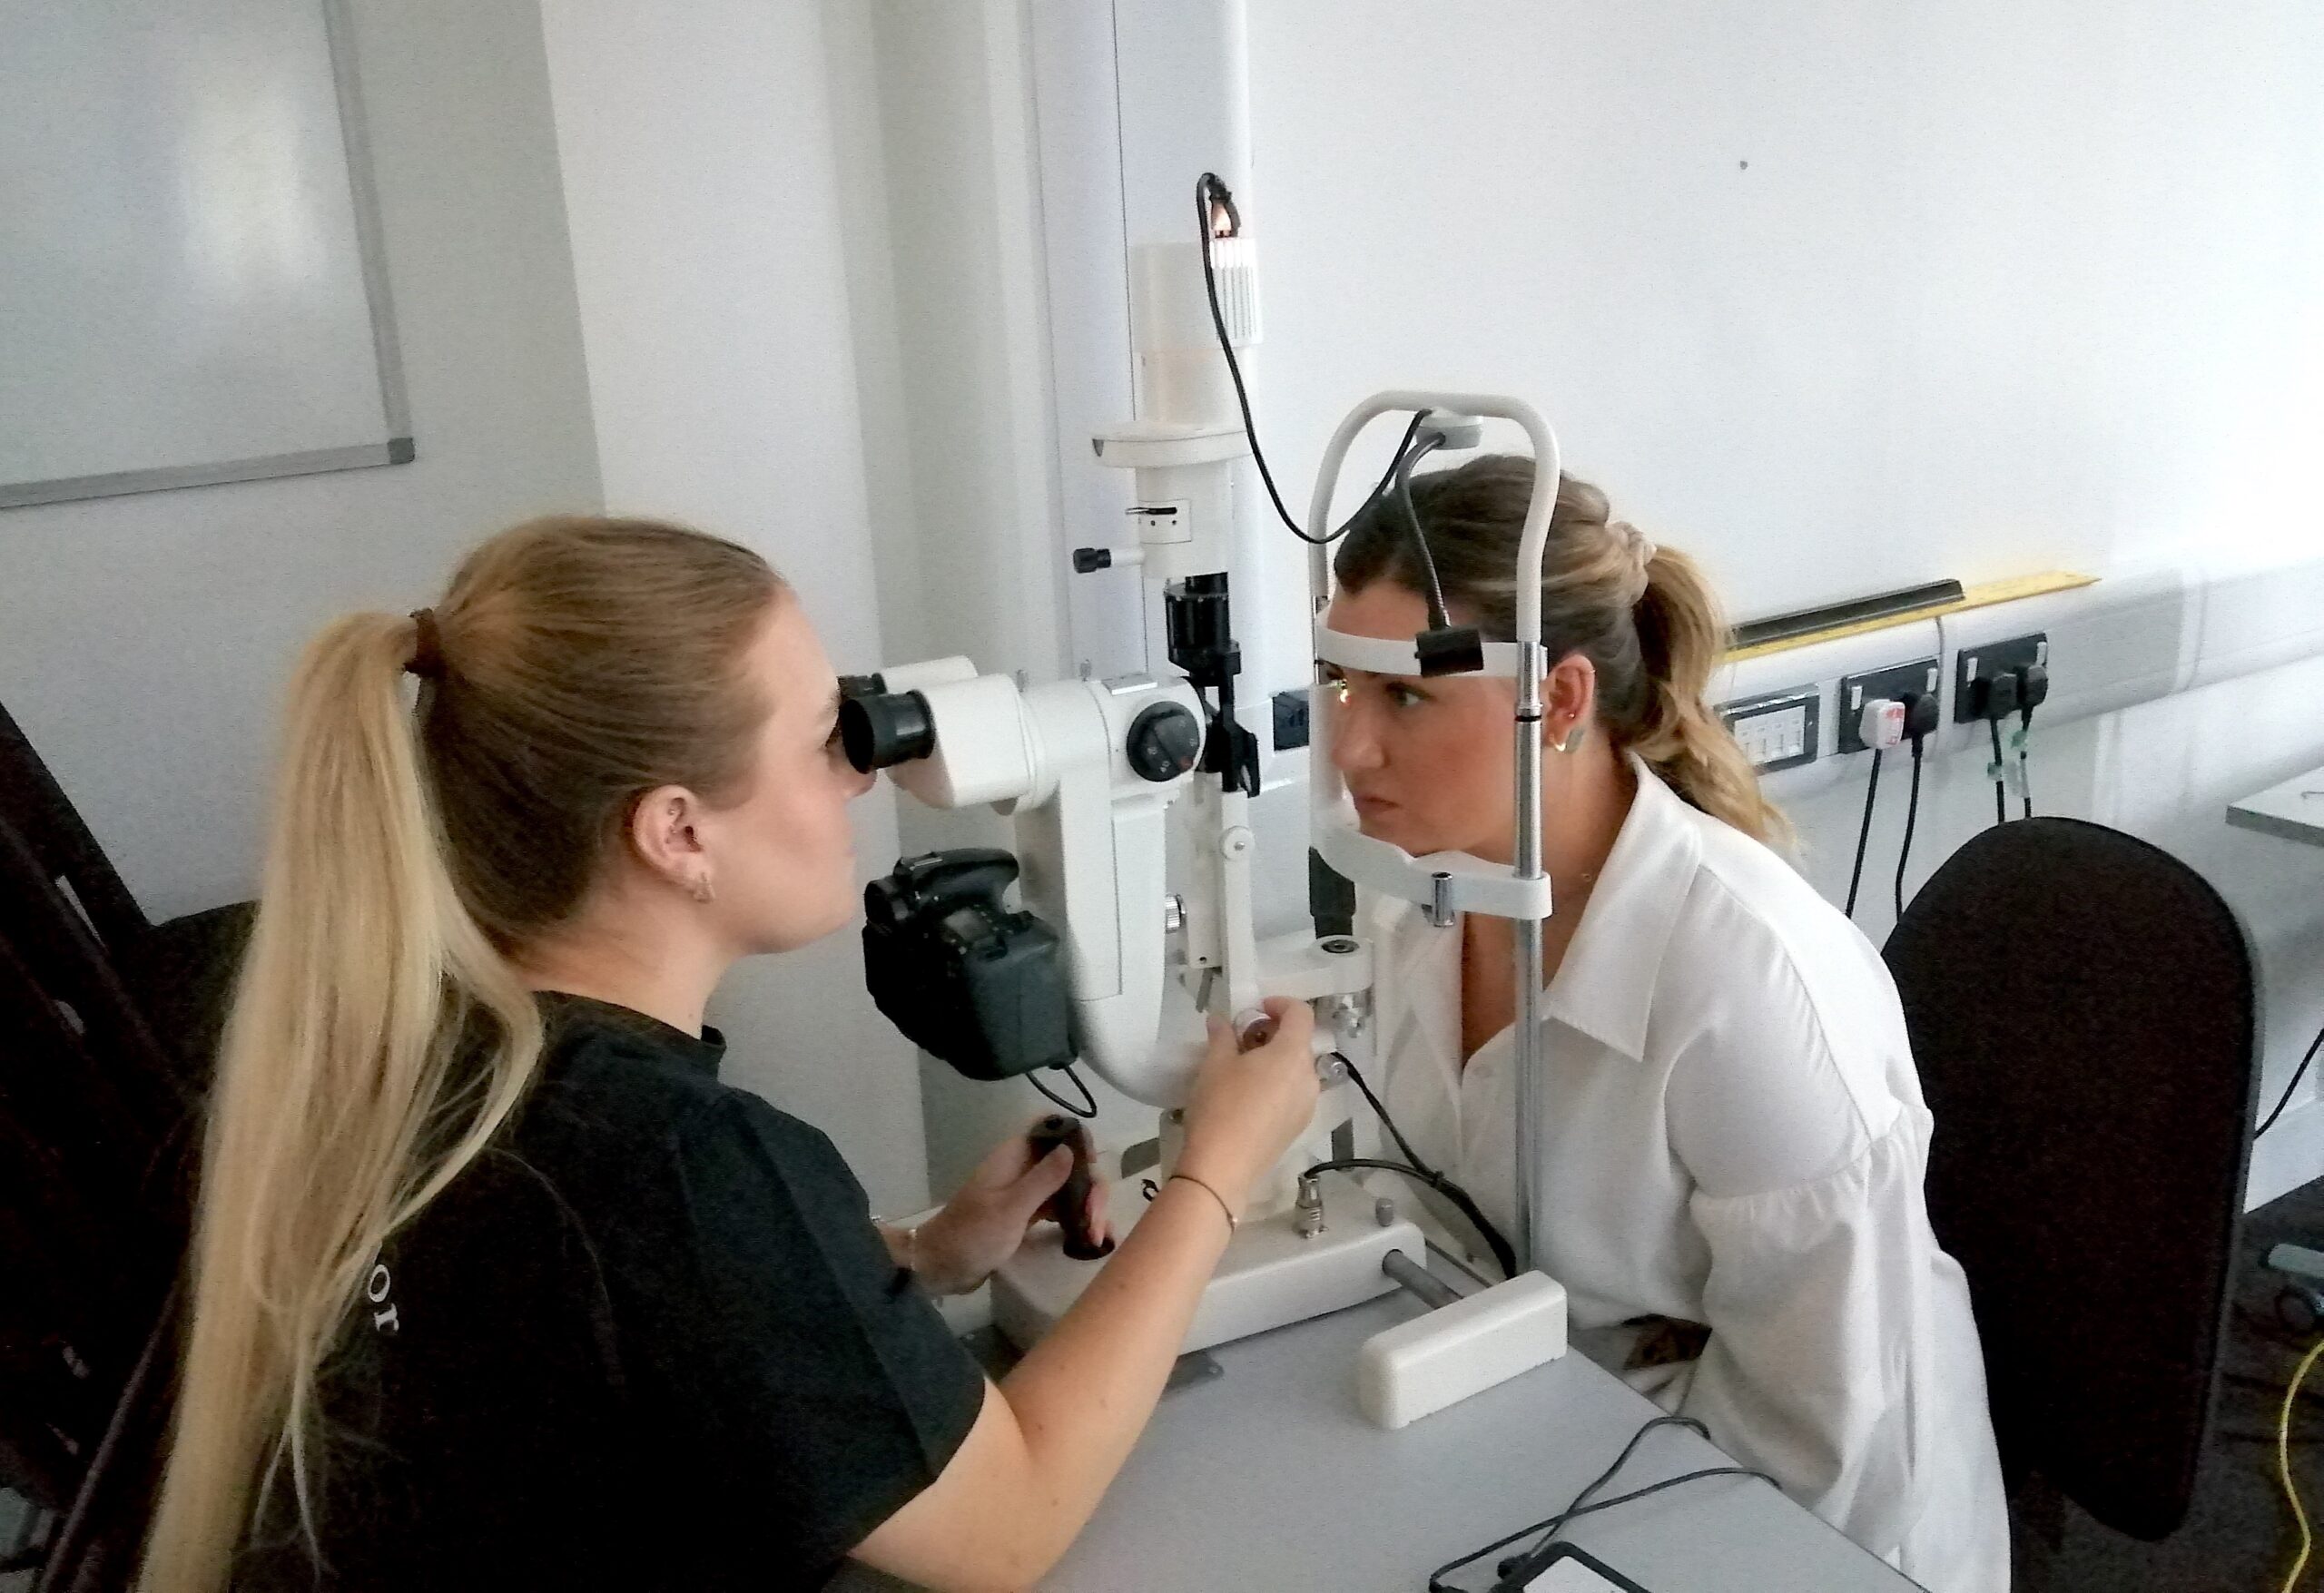 Specialist Contact Lens Workshop Inspires Next Generation of Opticians